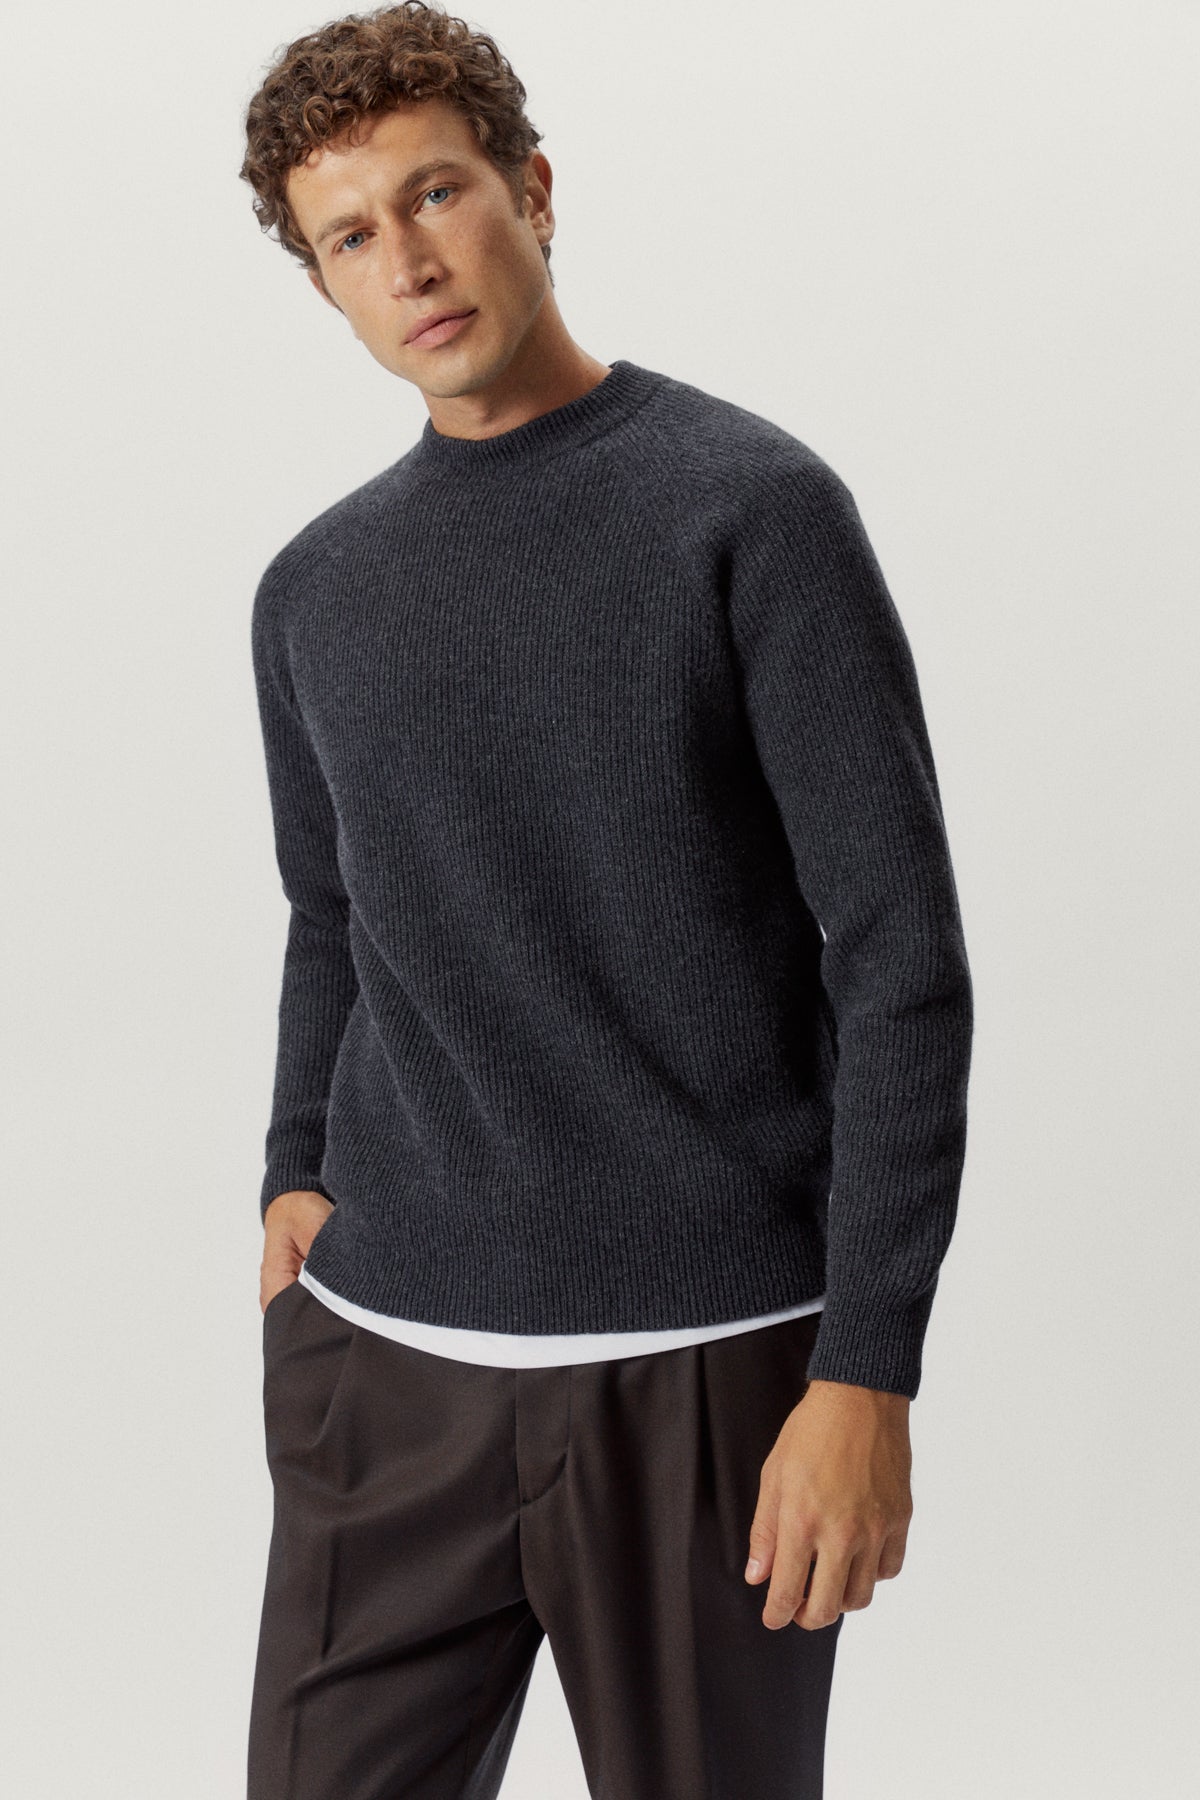 Ash Grey | The Woolen Perkins Sweater